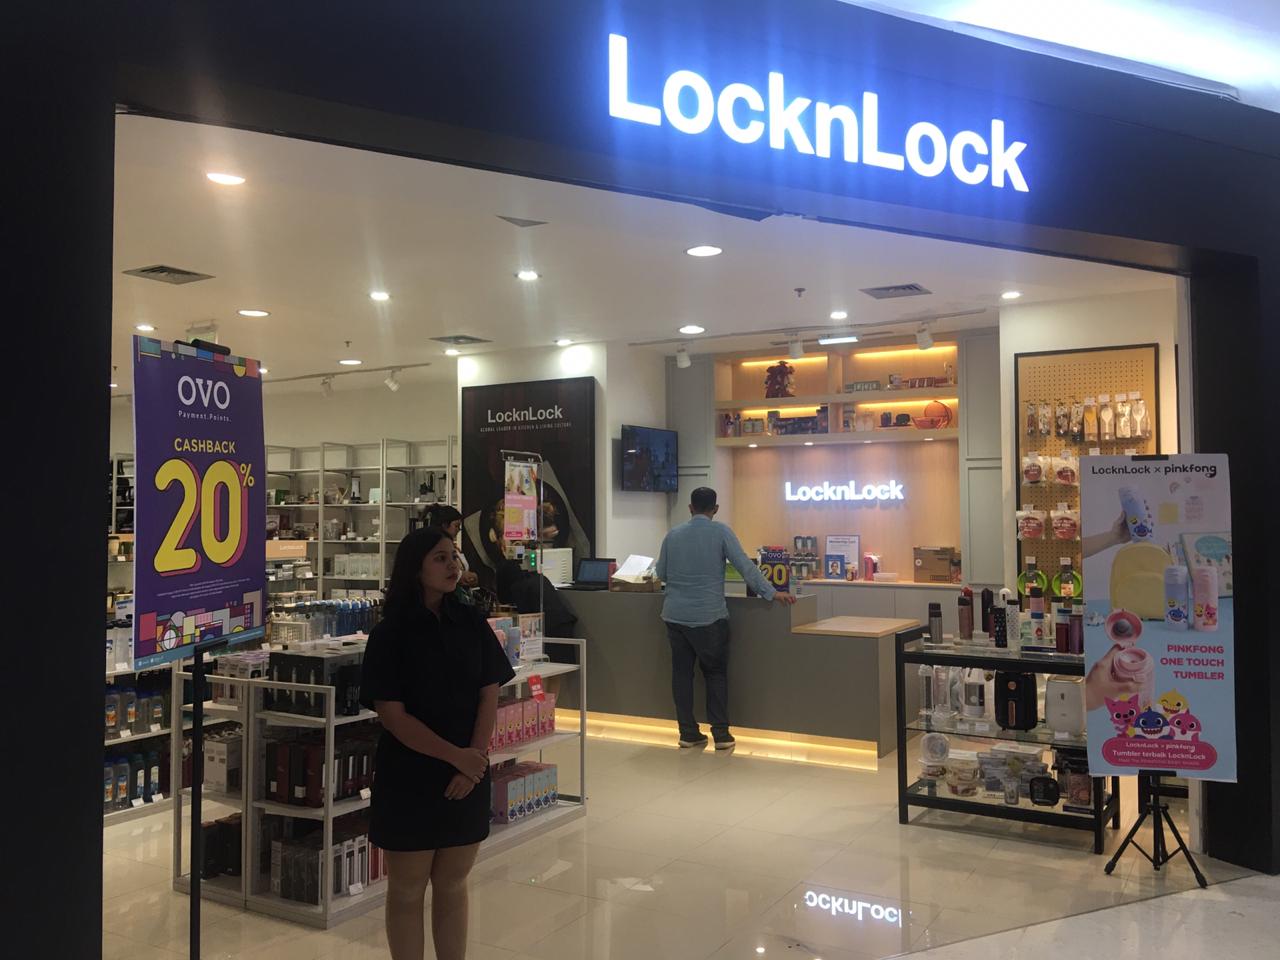 Lock & Lock shop front in lippo mall puri st. moritz